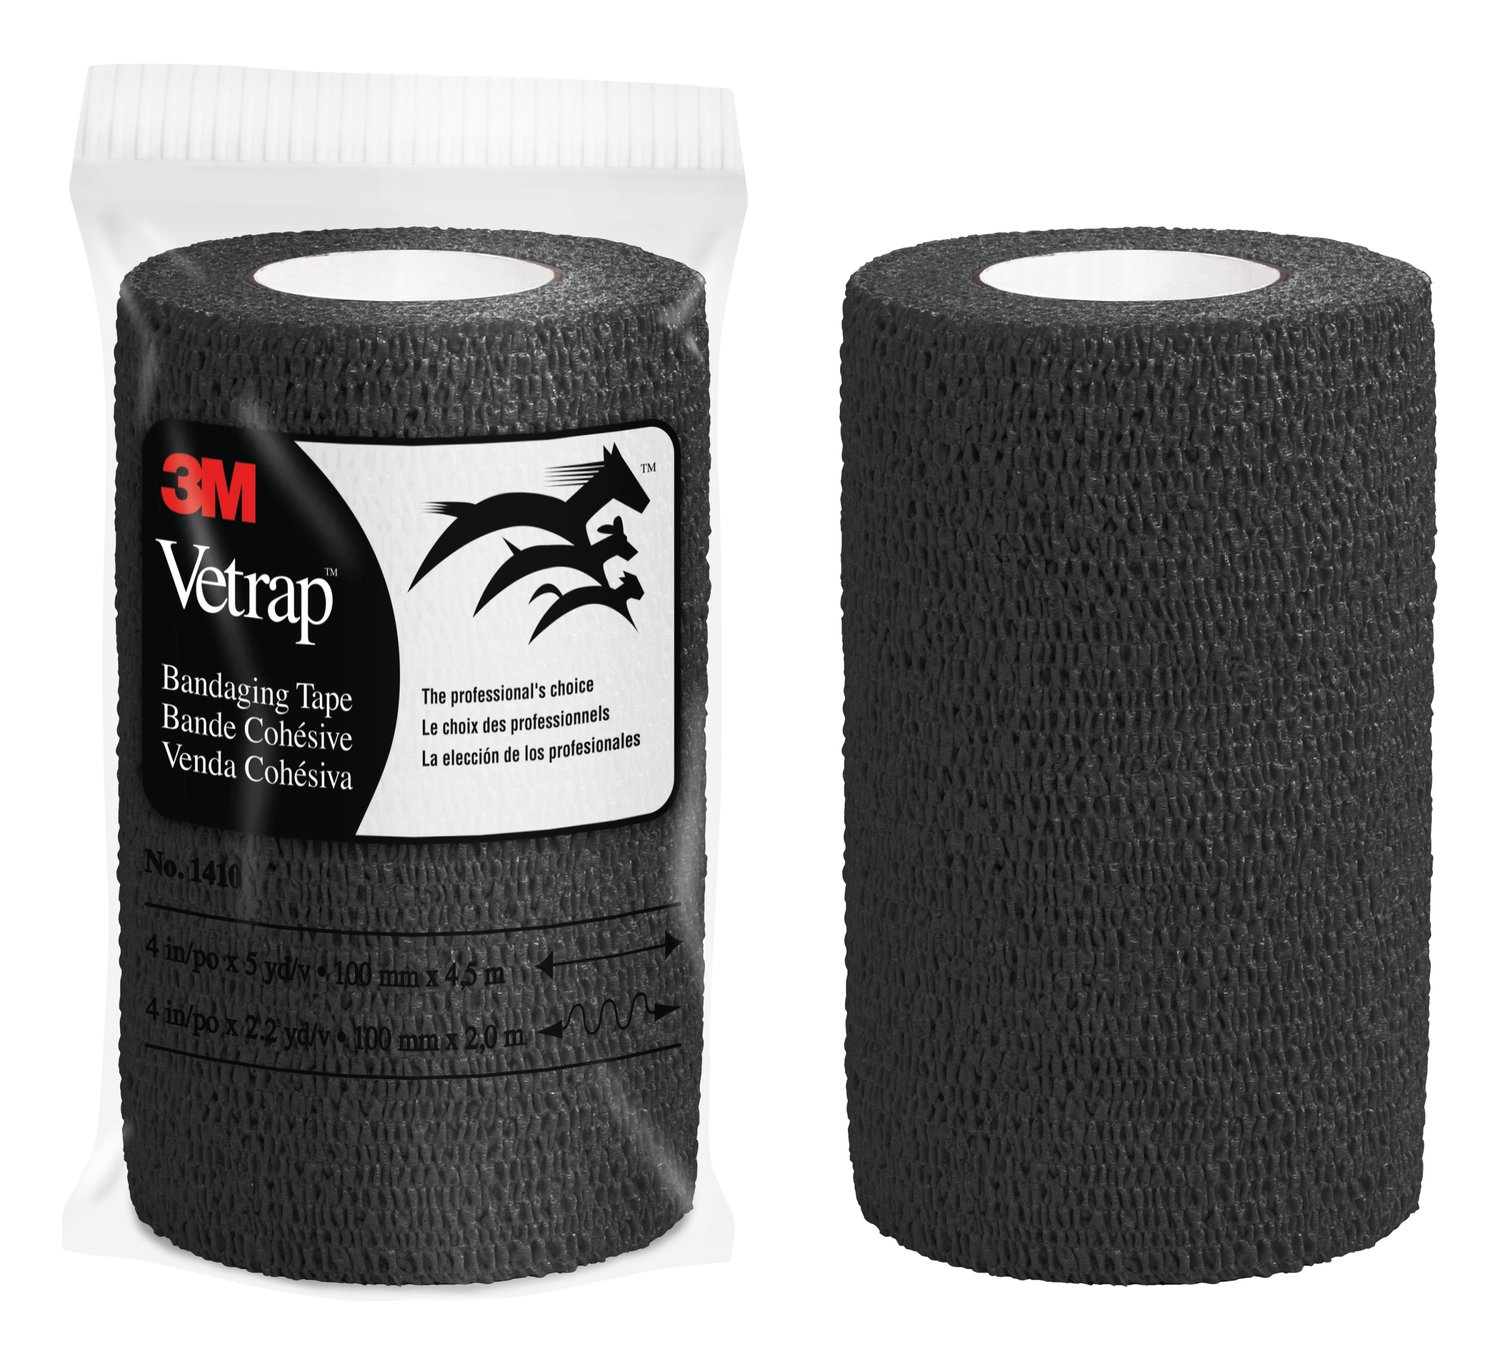 7100145863 - 3M Vetrap Bandaging Tape 1410BK-18, Black, 4 inch (10 cm), 100 Rolls/Case